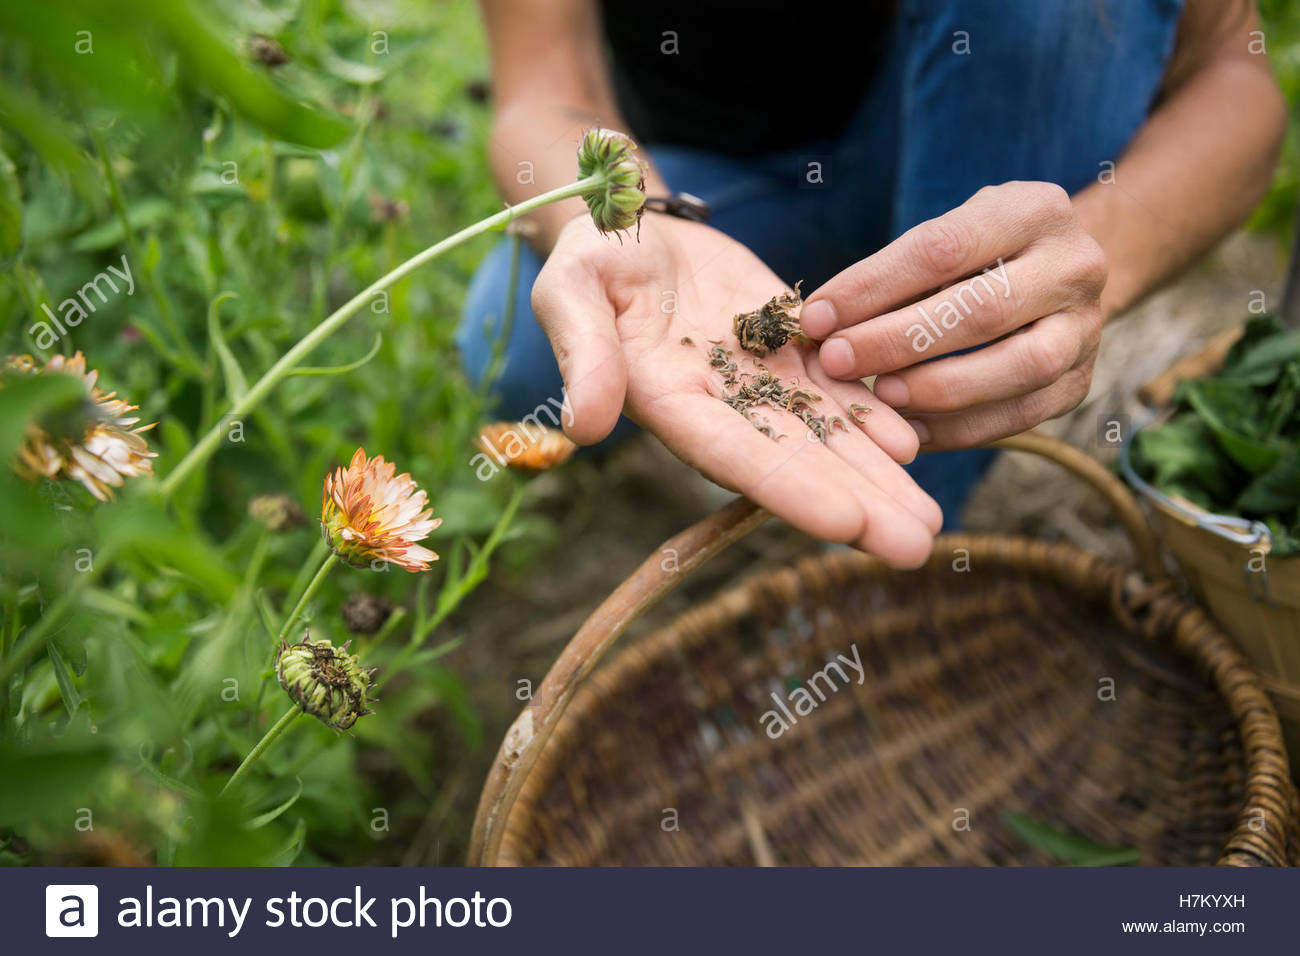 Woman examining seeds in garden Stock Photo